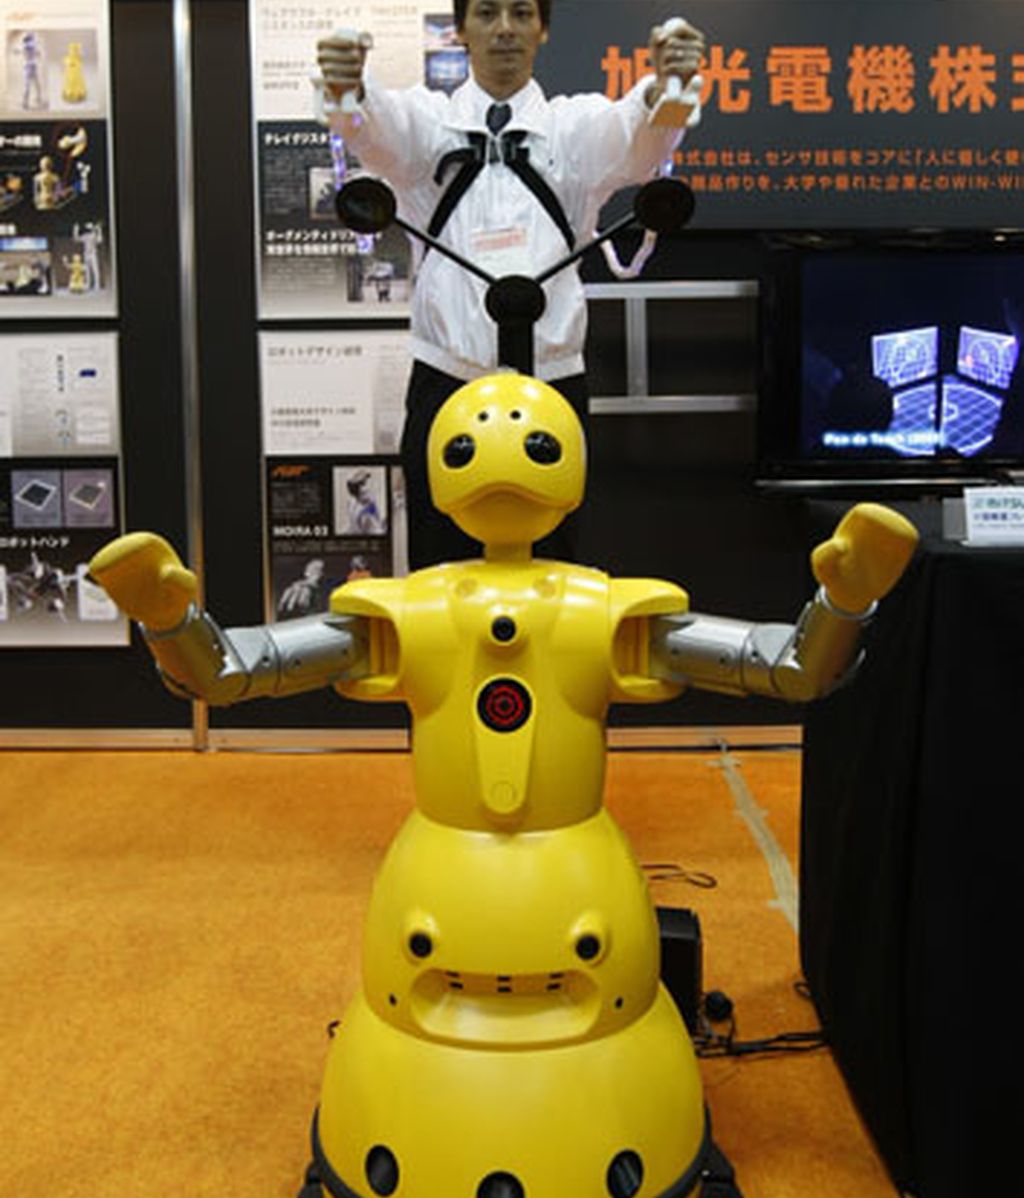 Exposición Internacional del Robot en Tokio